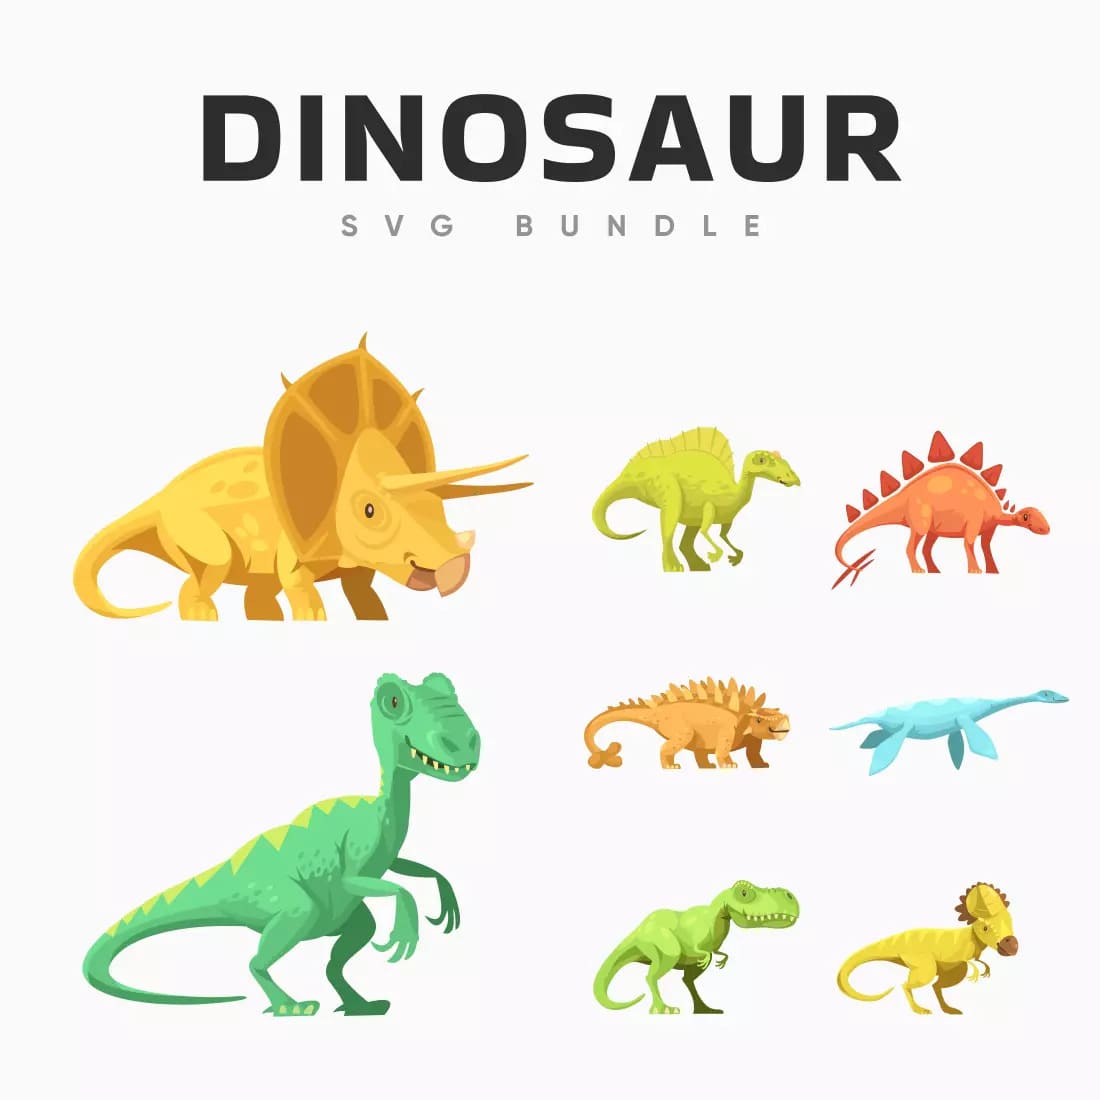 Dinosaur SVG Bundle Preview.